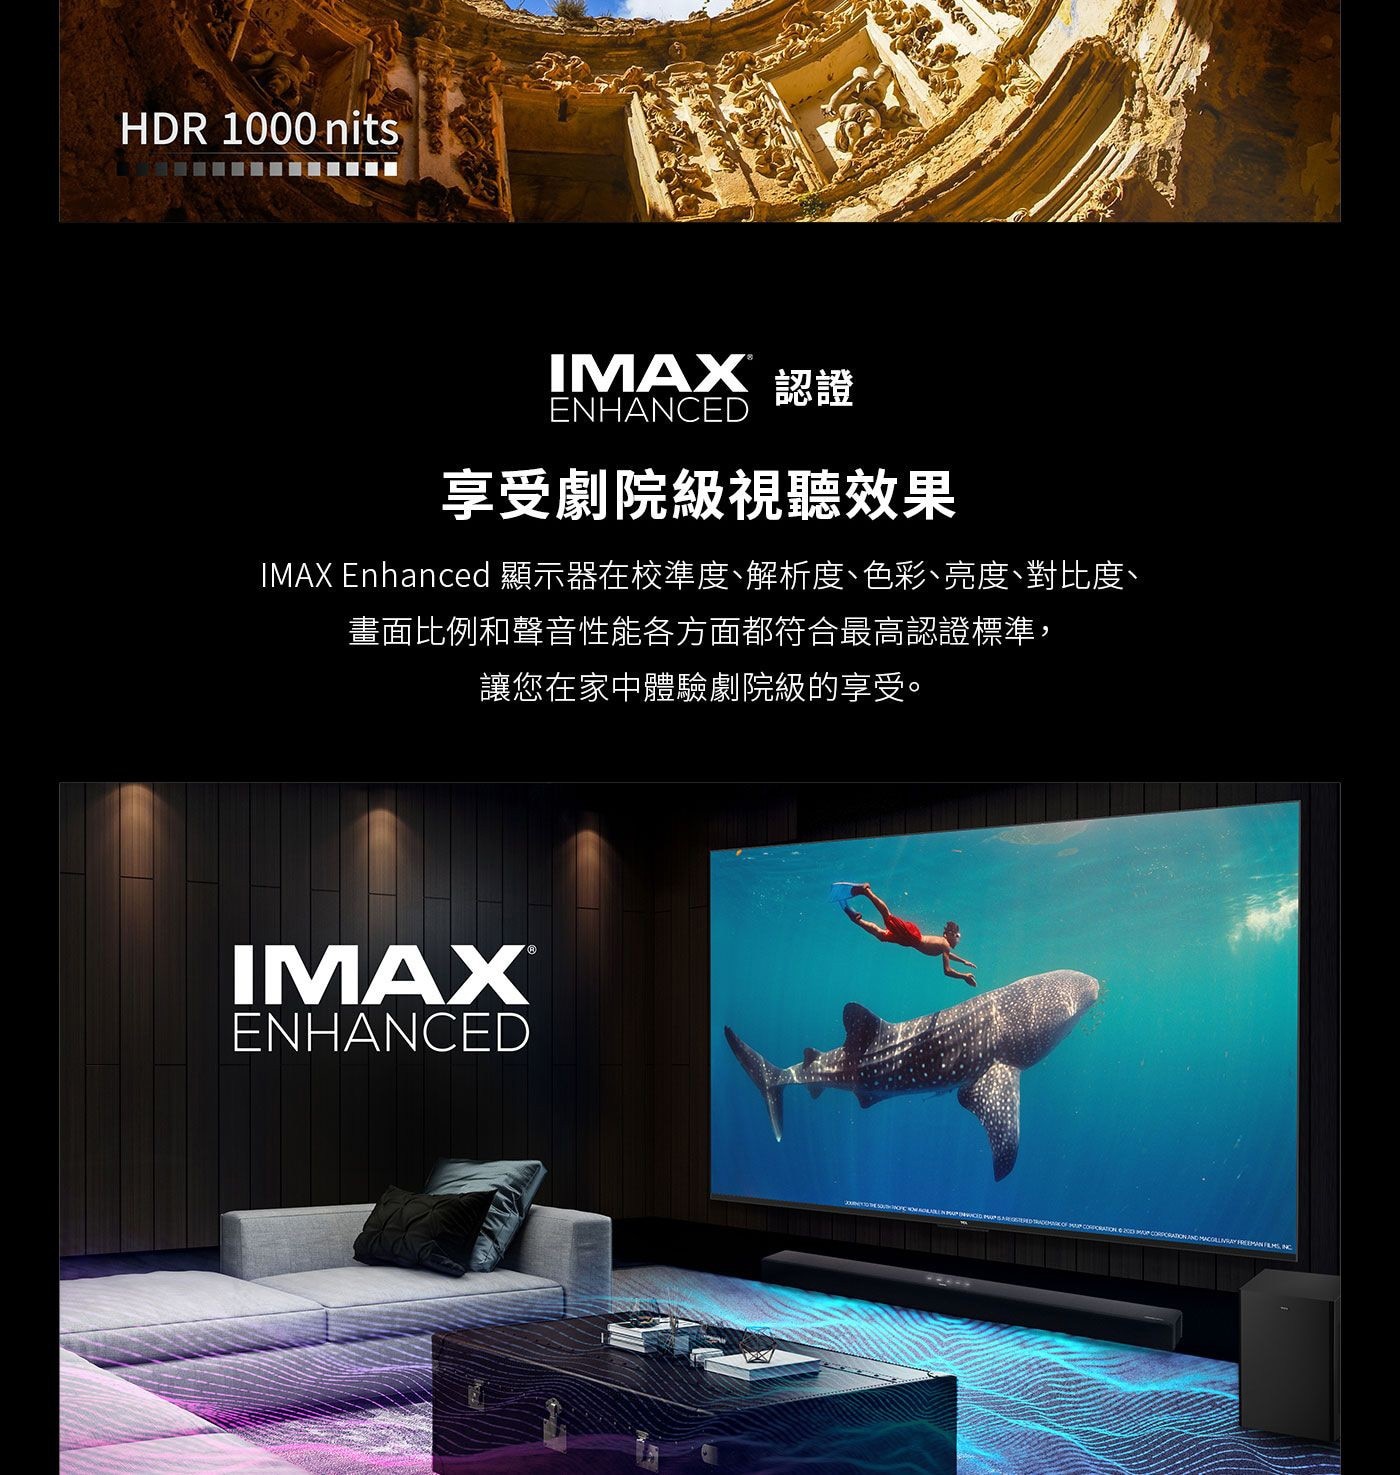 TCL 75吋 4K QLED Google TV 量子智能連網液晶顯示器 75C745 IMAX認證享受劇院級視聽效果